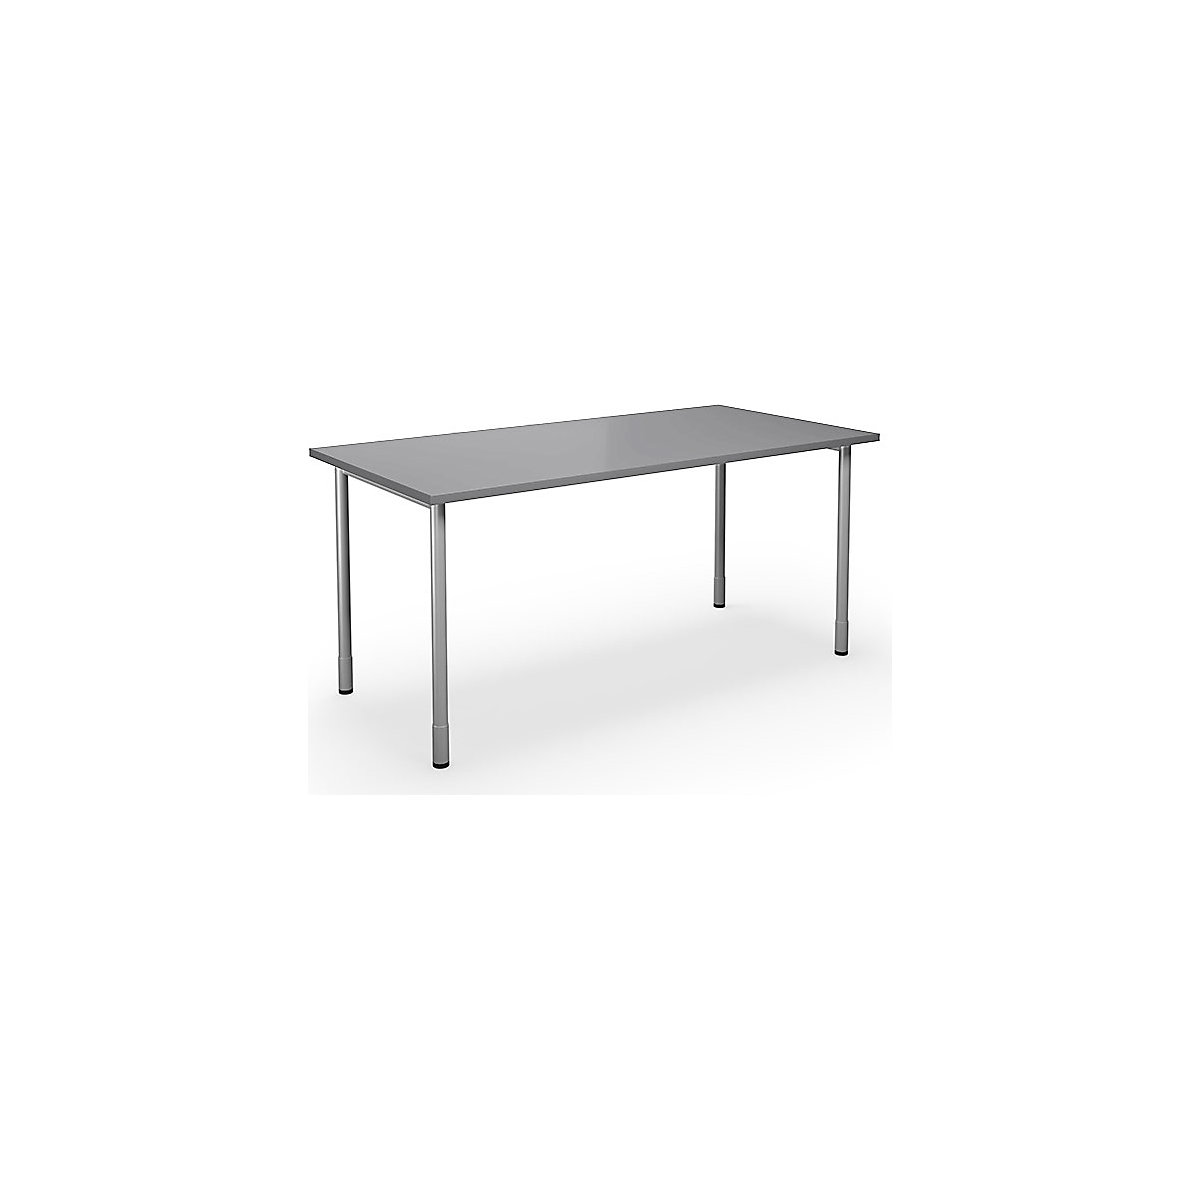 DUO-C multi-purpose desk, straight tabletop, WxD 1600 x 800 mm, light grey, silver-17